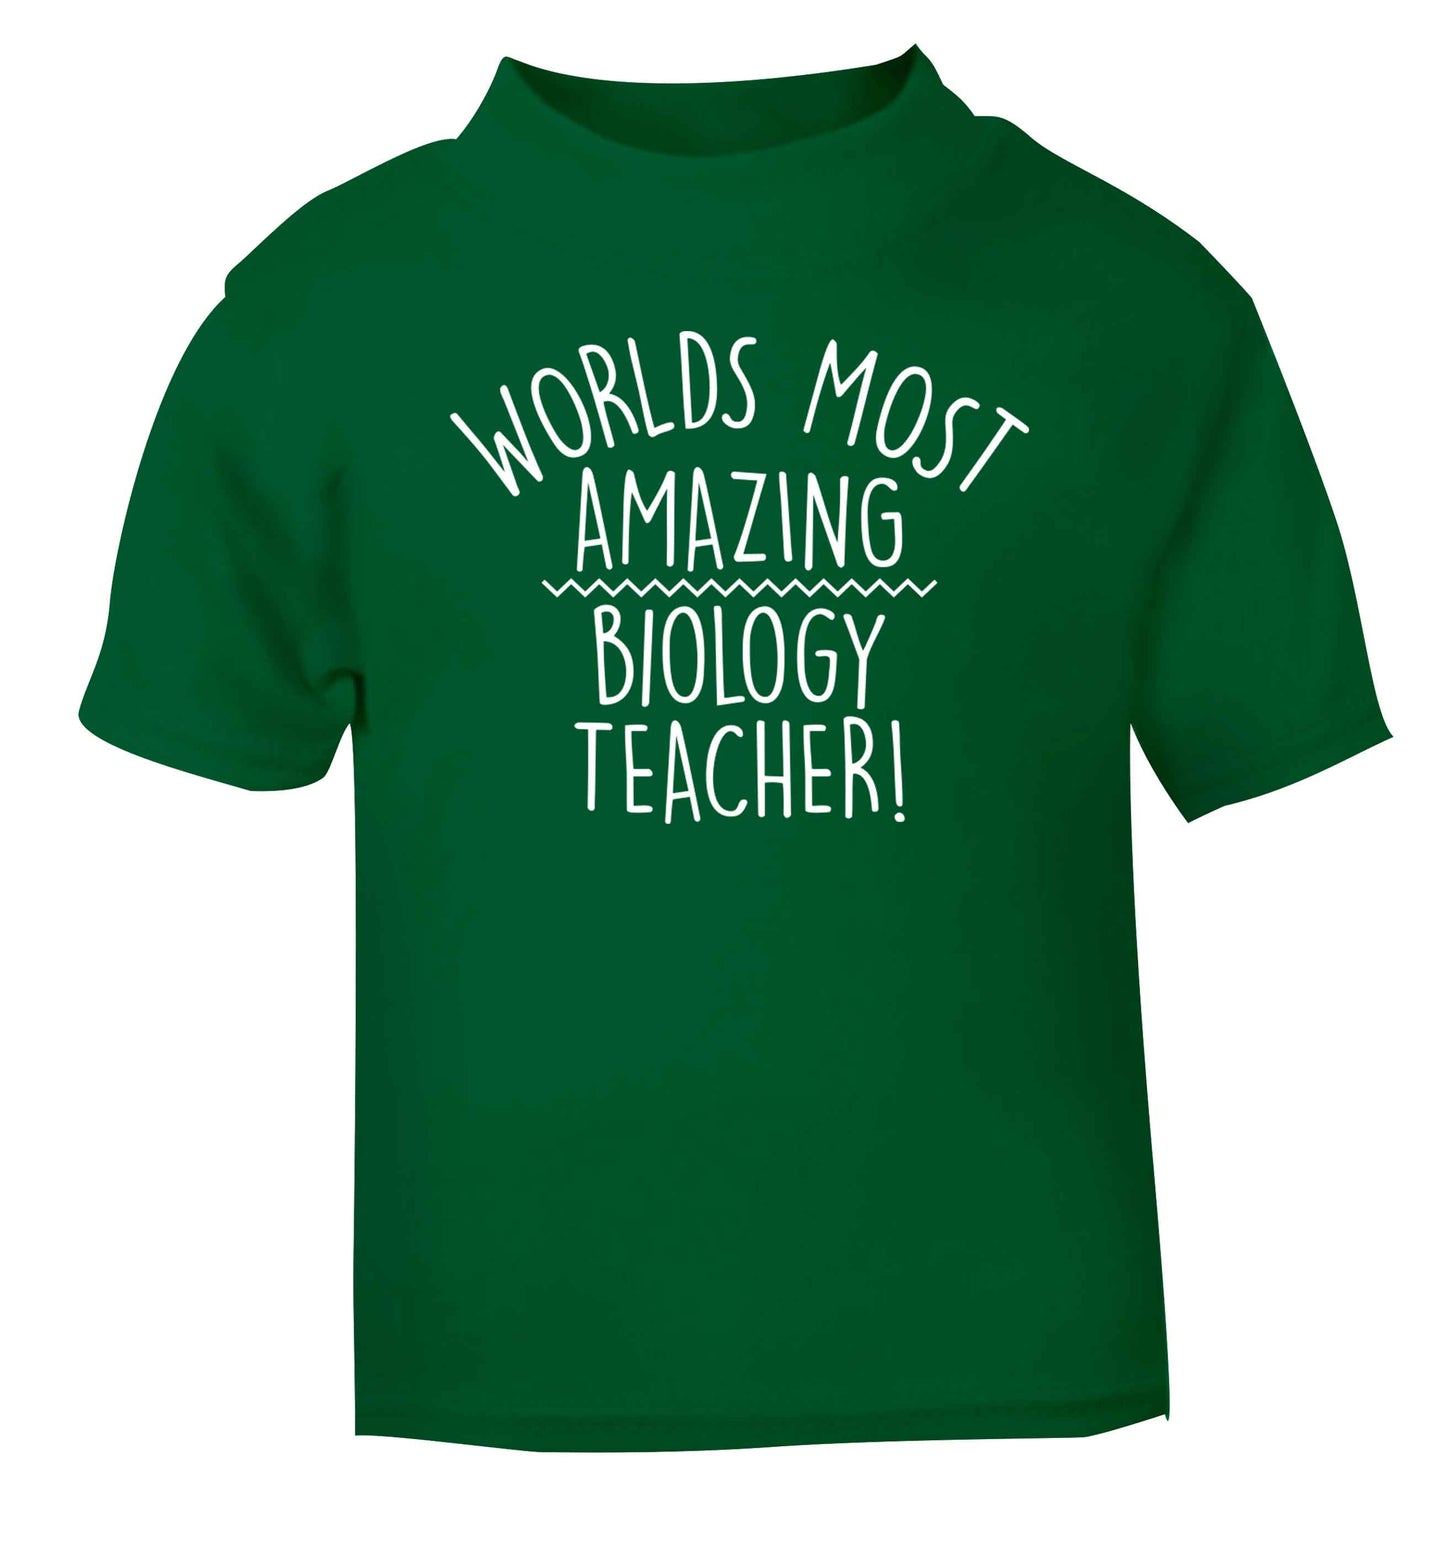 Worlds most amazing biology teacher green baby toddler Tshirt 2 Years